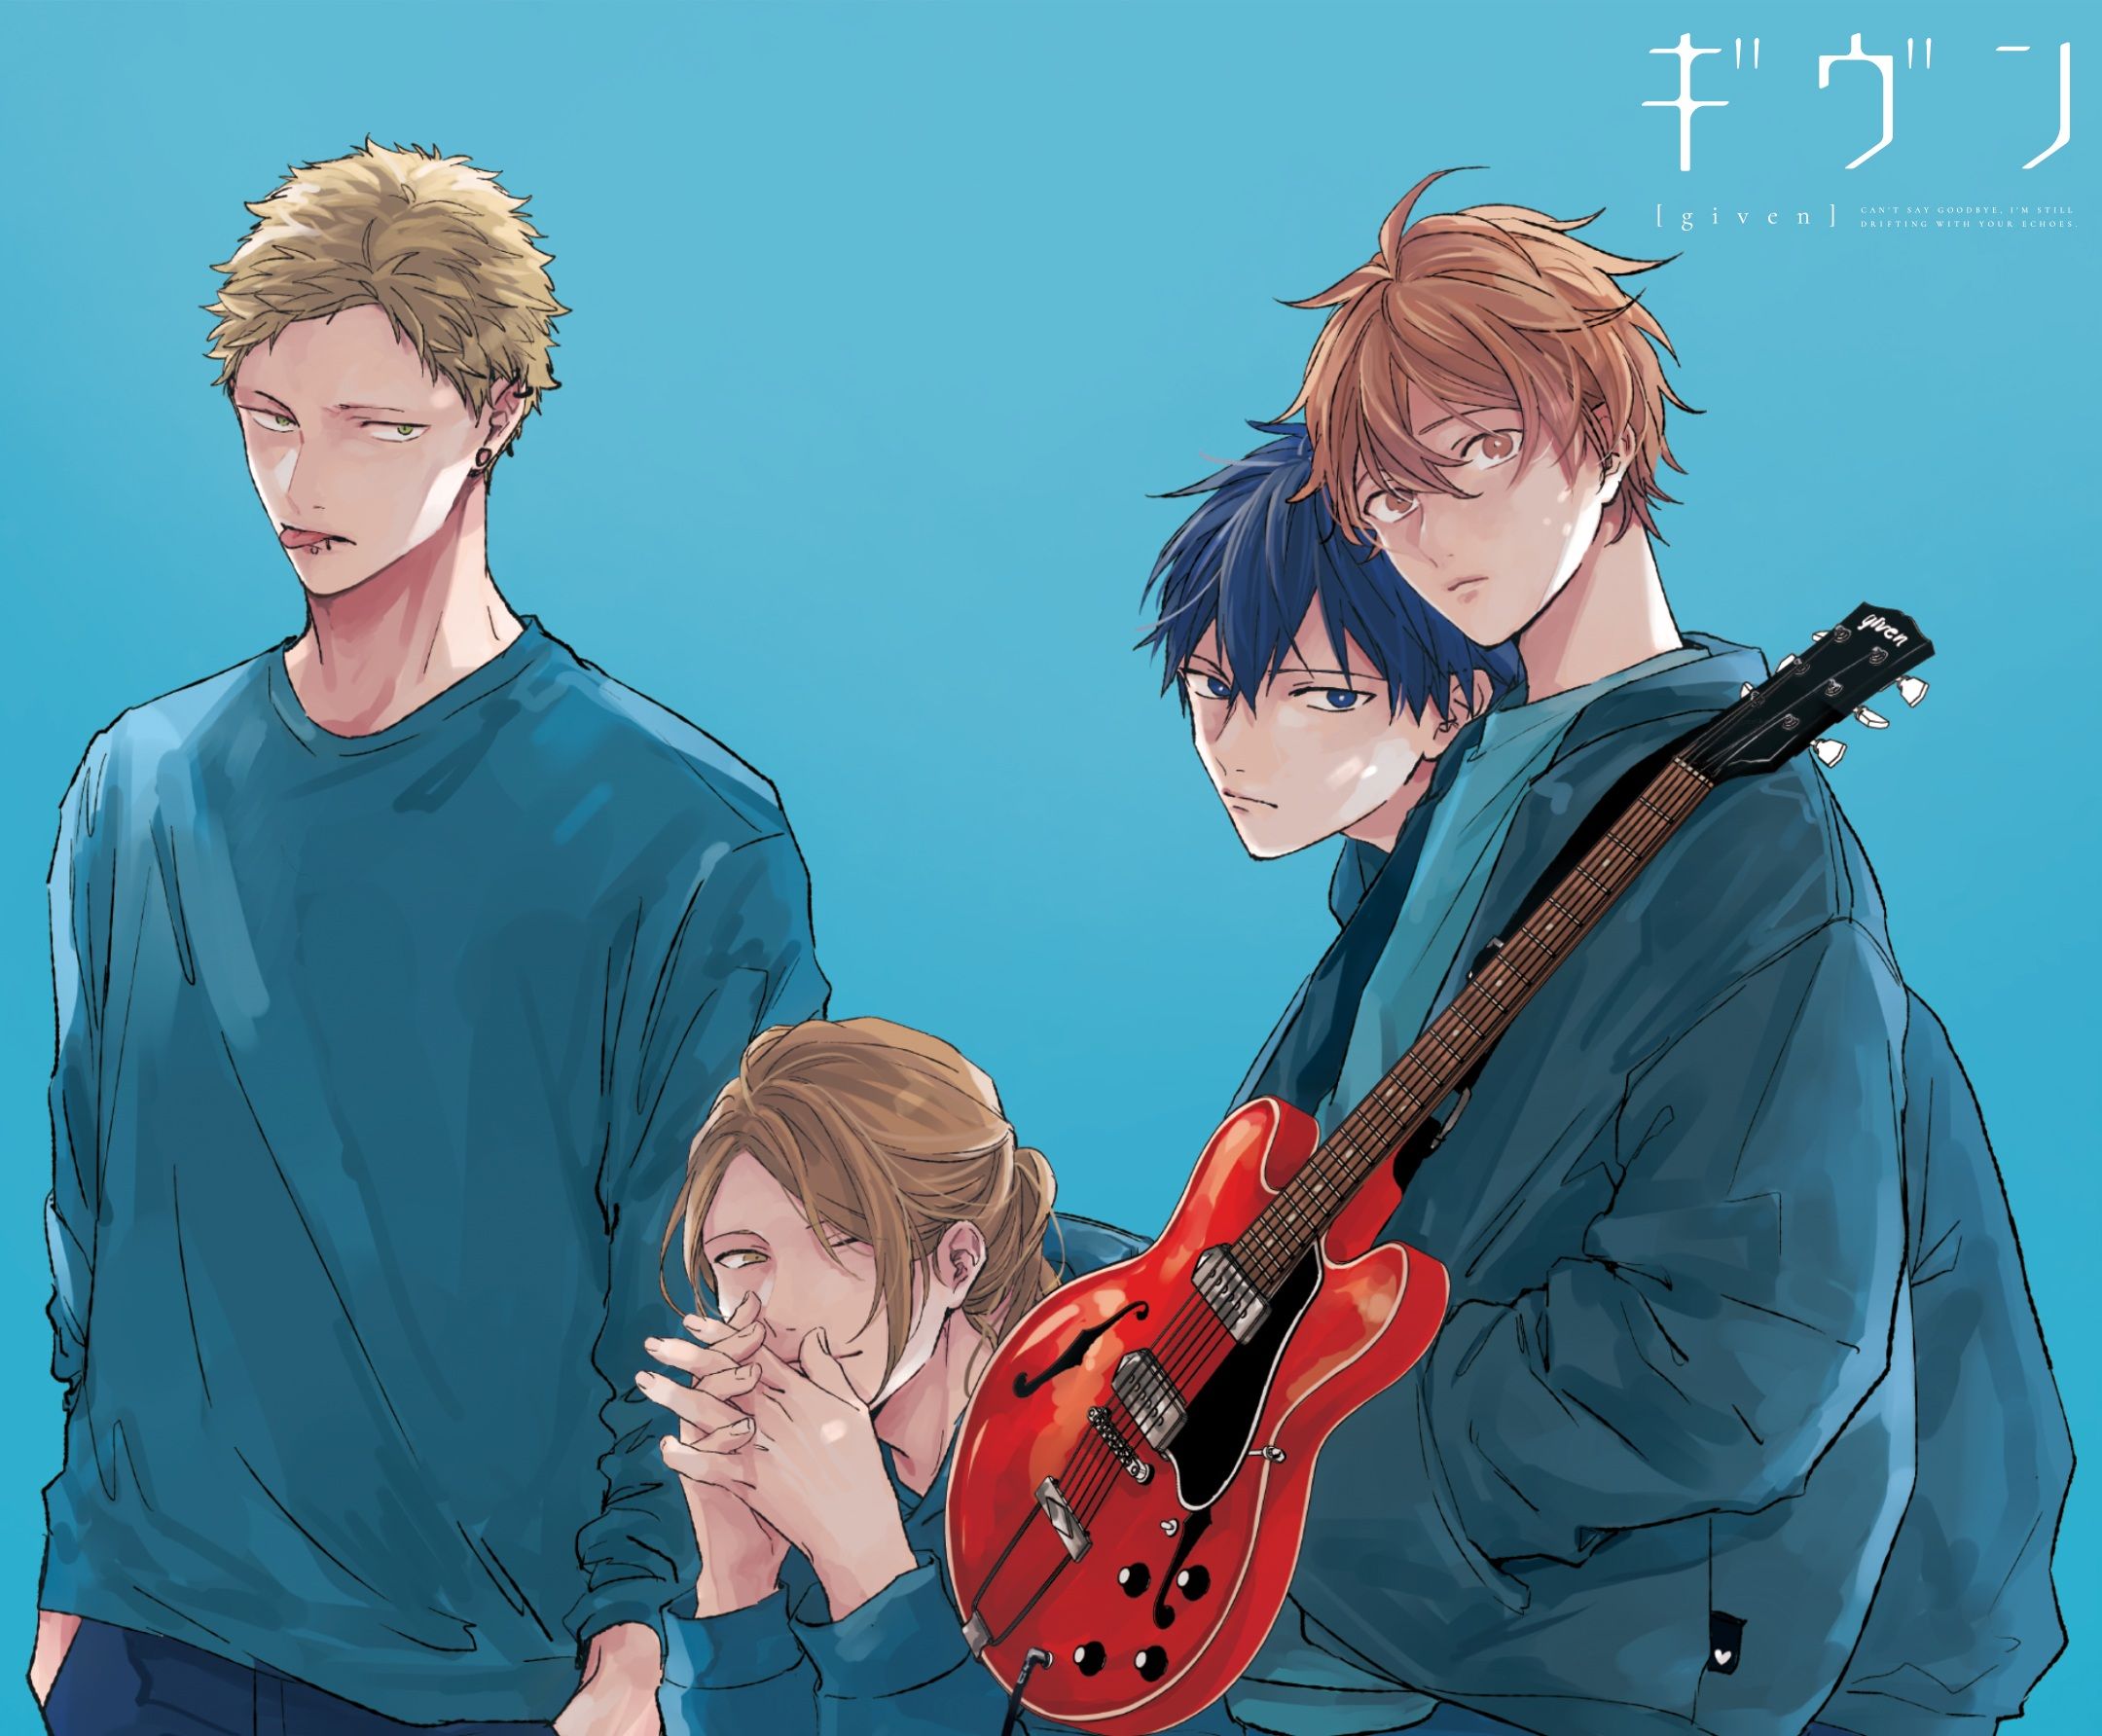 Anime Band by TommiTakagi on DeviantArt